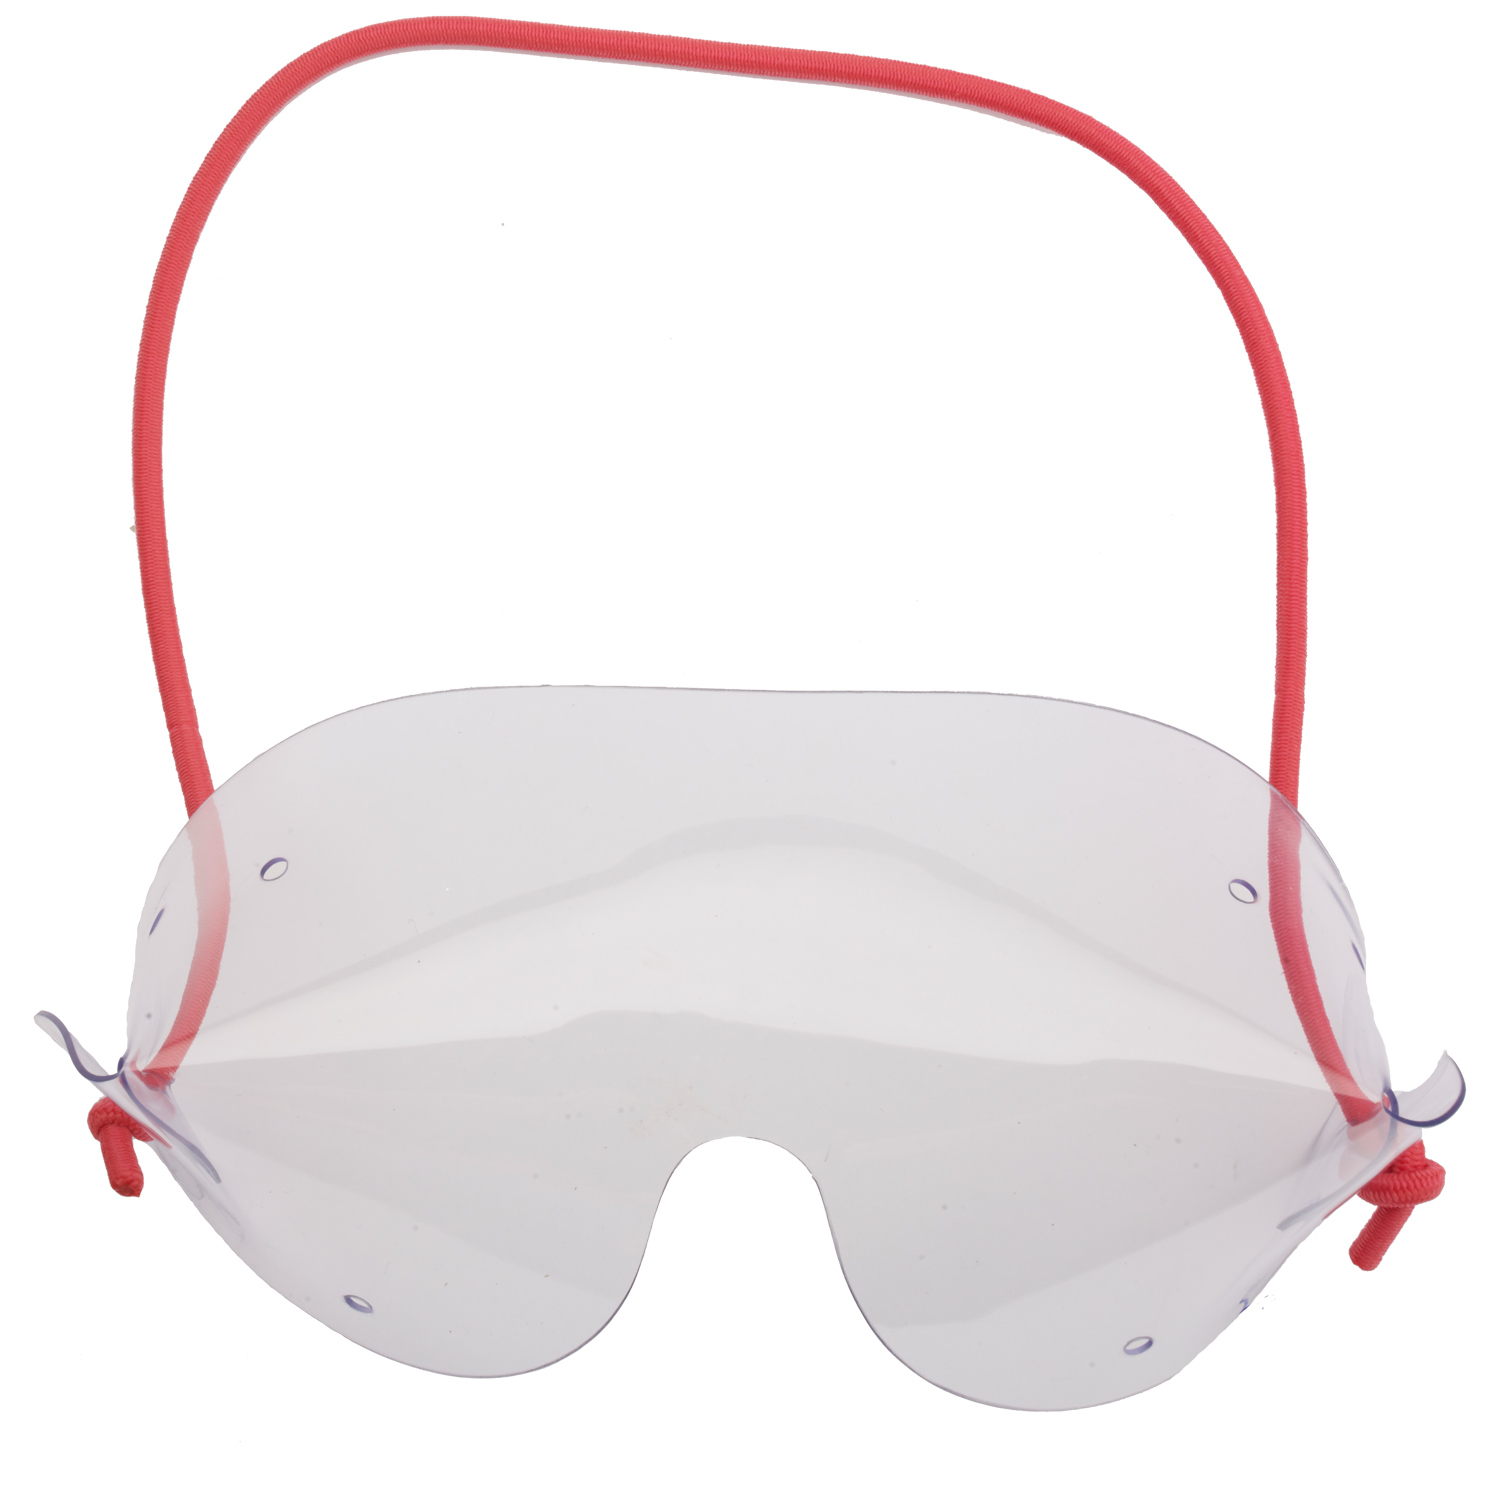 Goggles Flexvision Overglasses